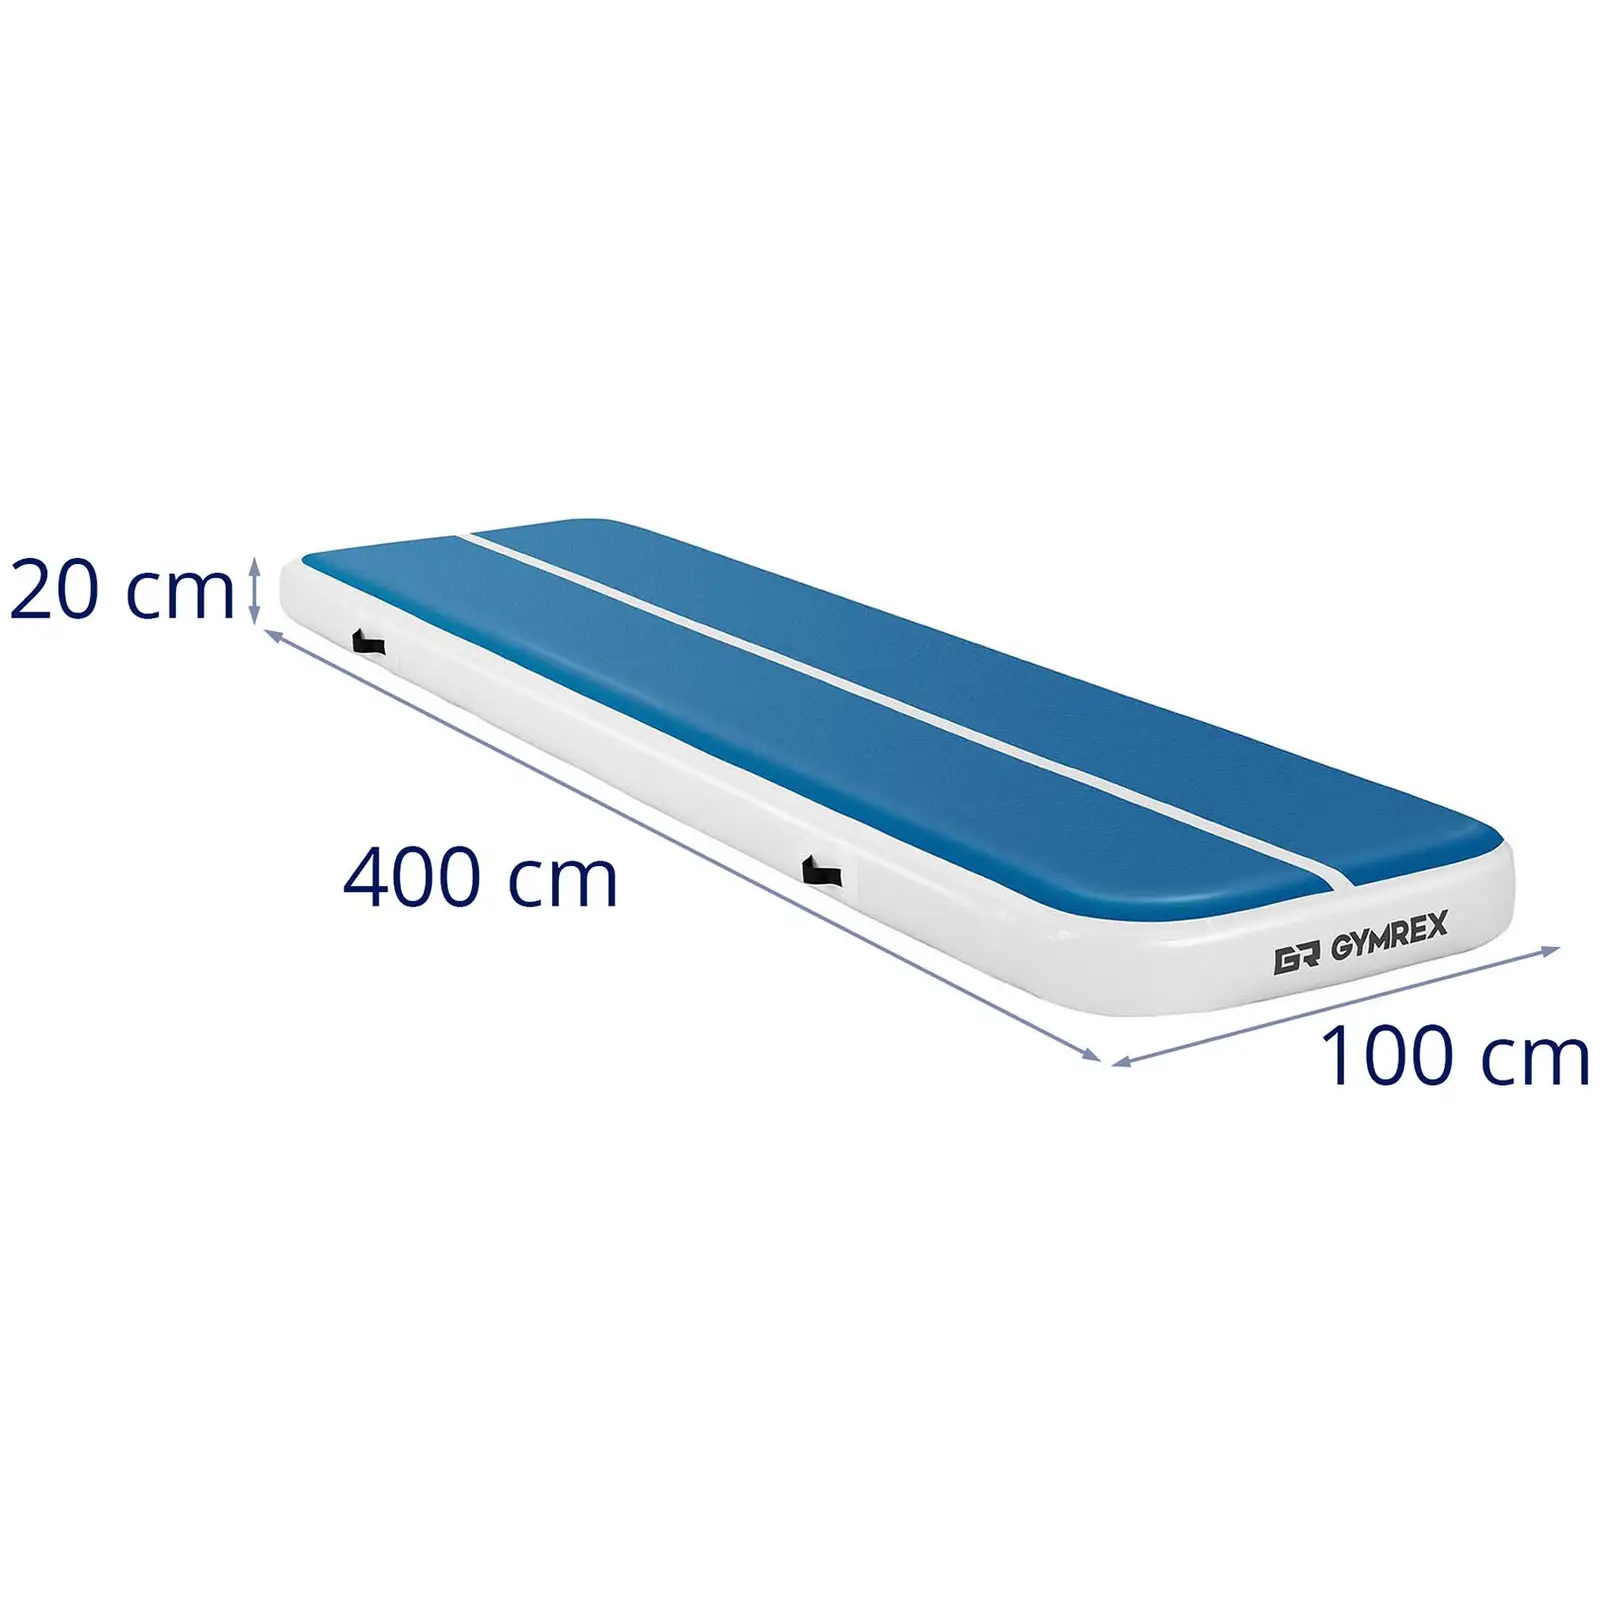 Nafukovací žíněnka - 400 x 100 x 20 cm - 200 kg - modrá/bílá